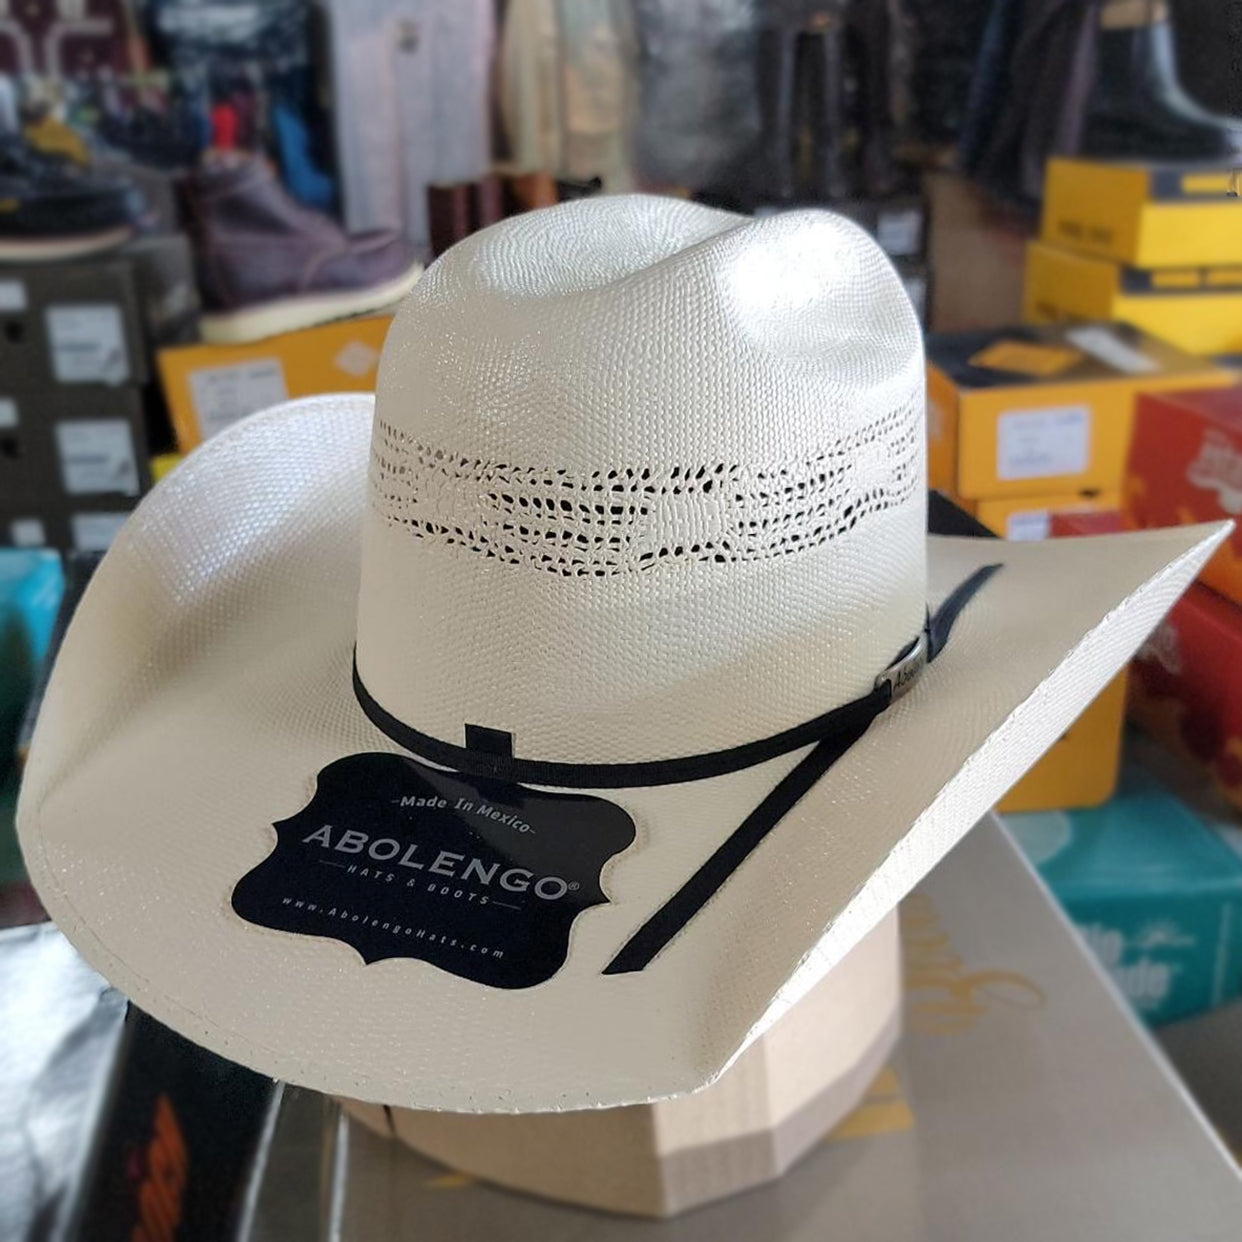 Abolengo Bangora Cowboy Hat